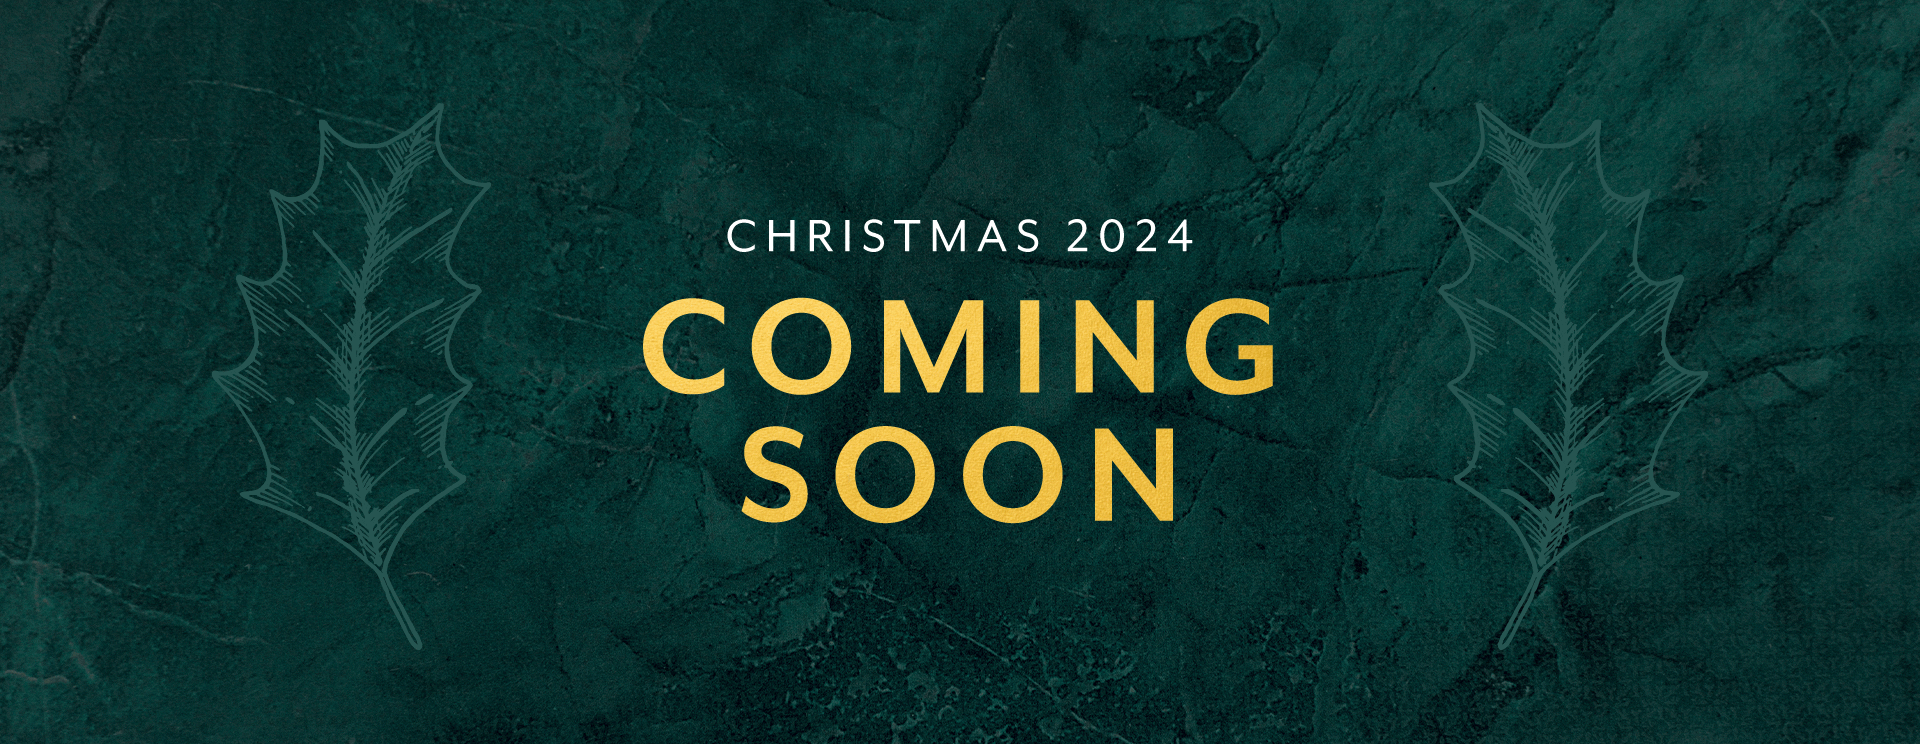 Christmas 2024 at Woburn Sands